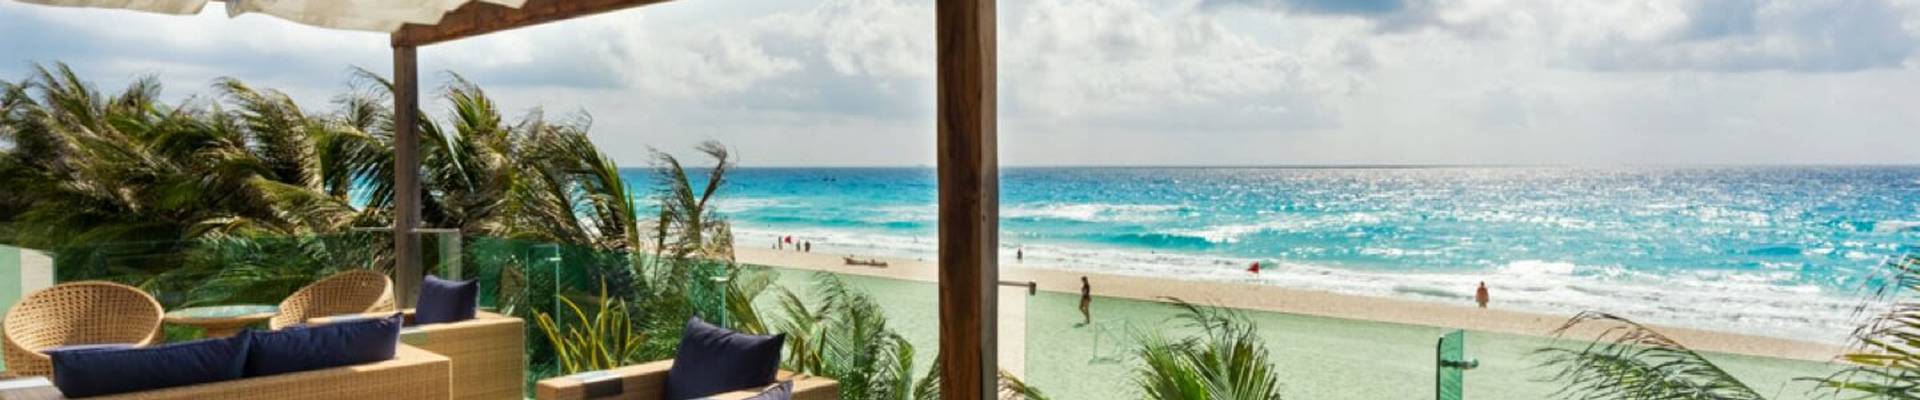 Flamingo Hotels - Cancún - 